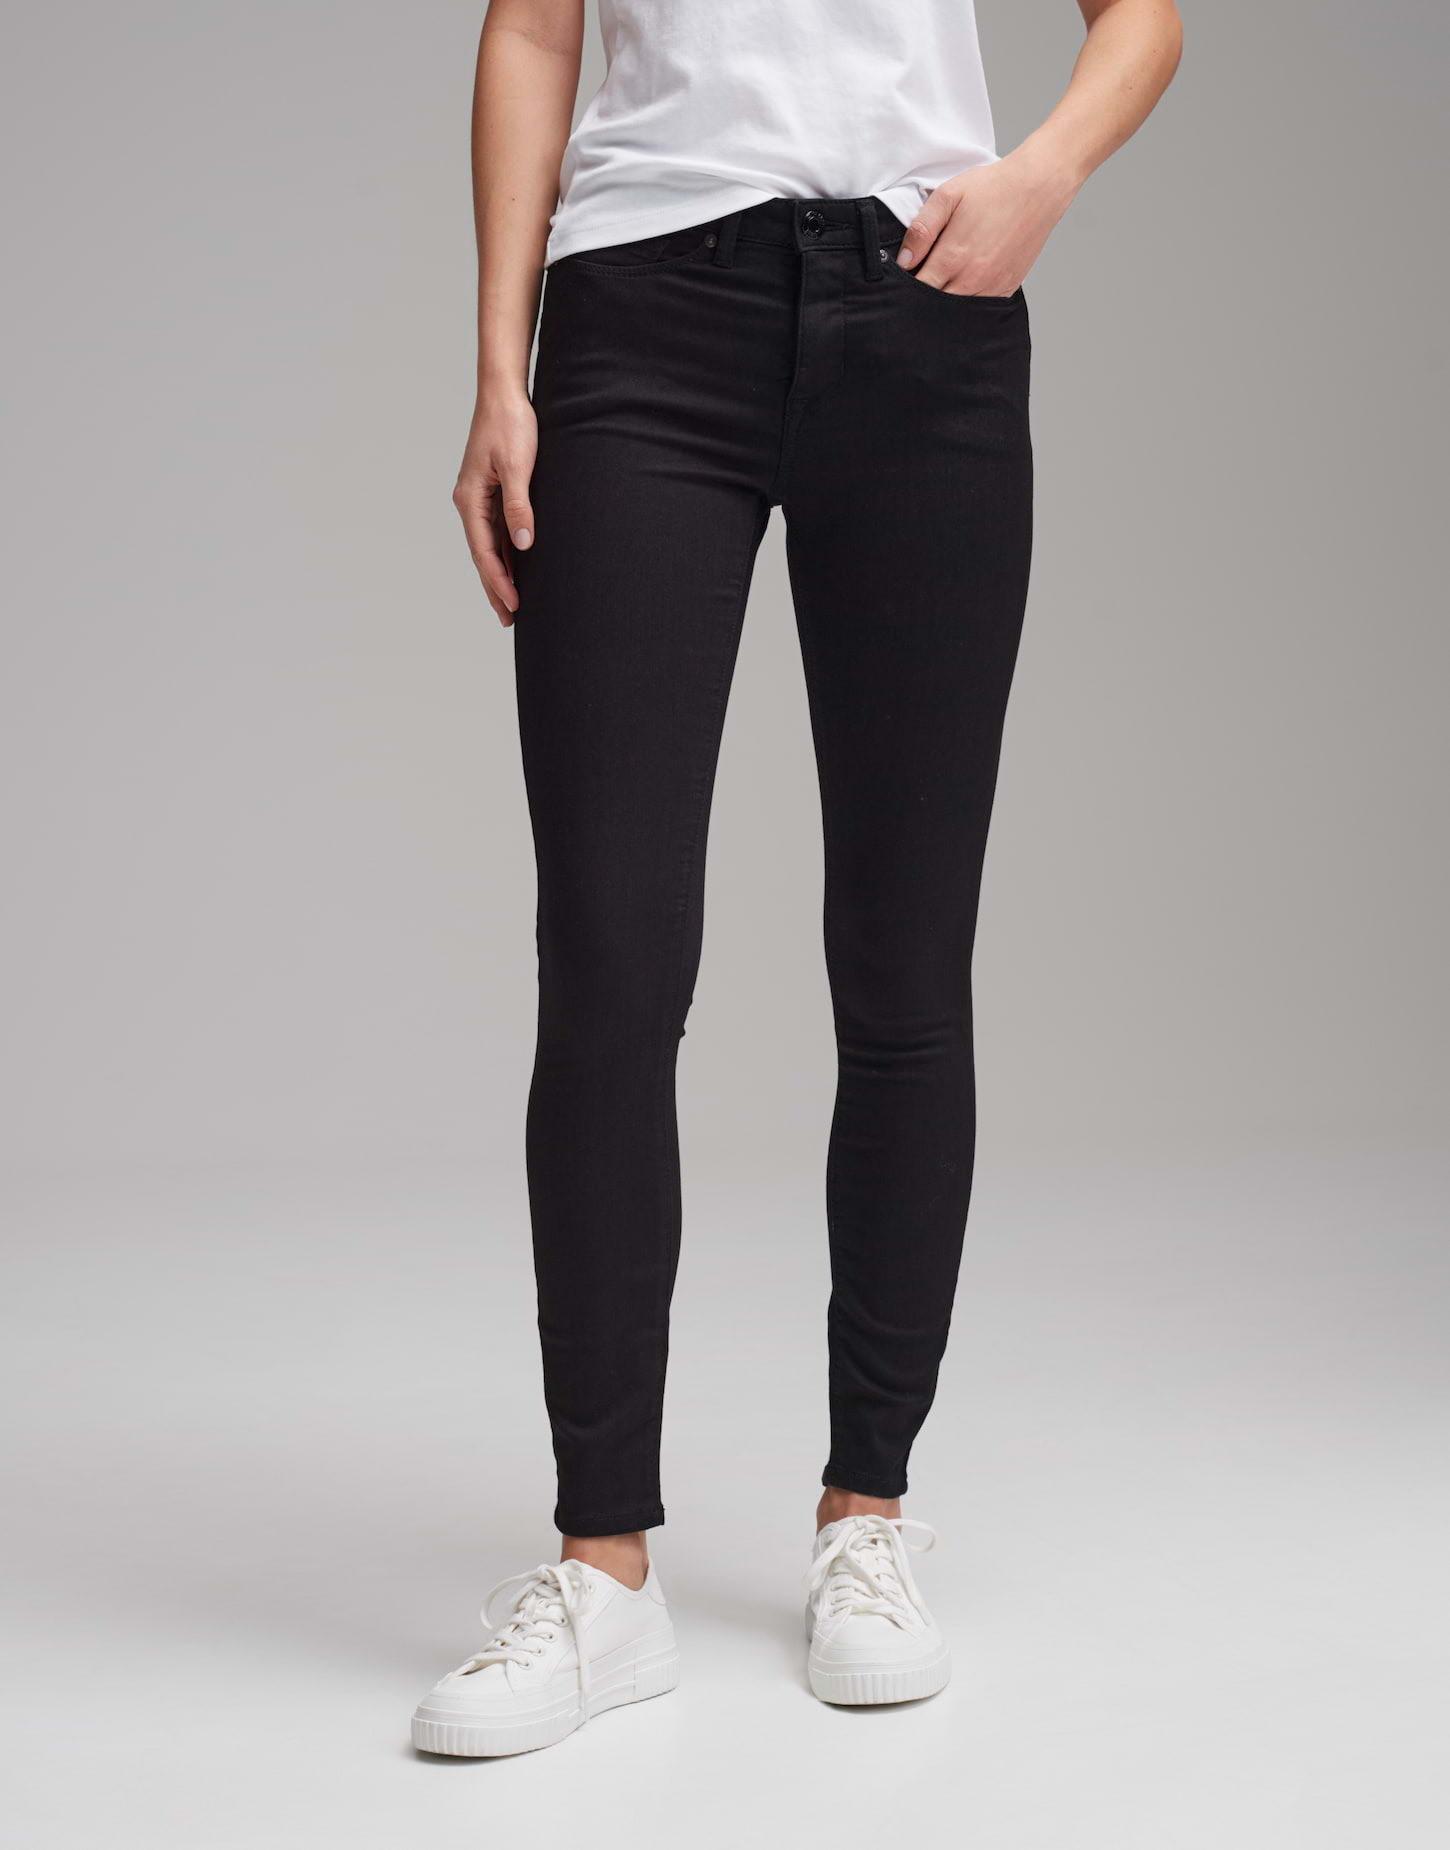 Skinny Jeans Elma Black Figurbetont Damen Schwarz L32/44 von OPUS